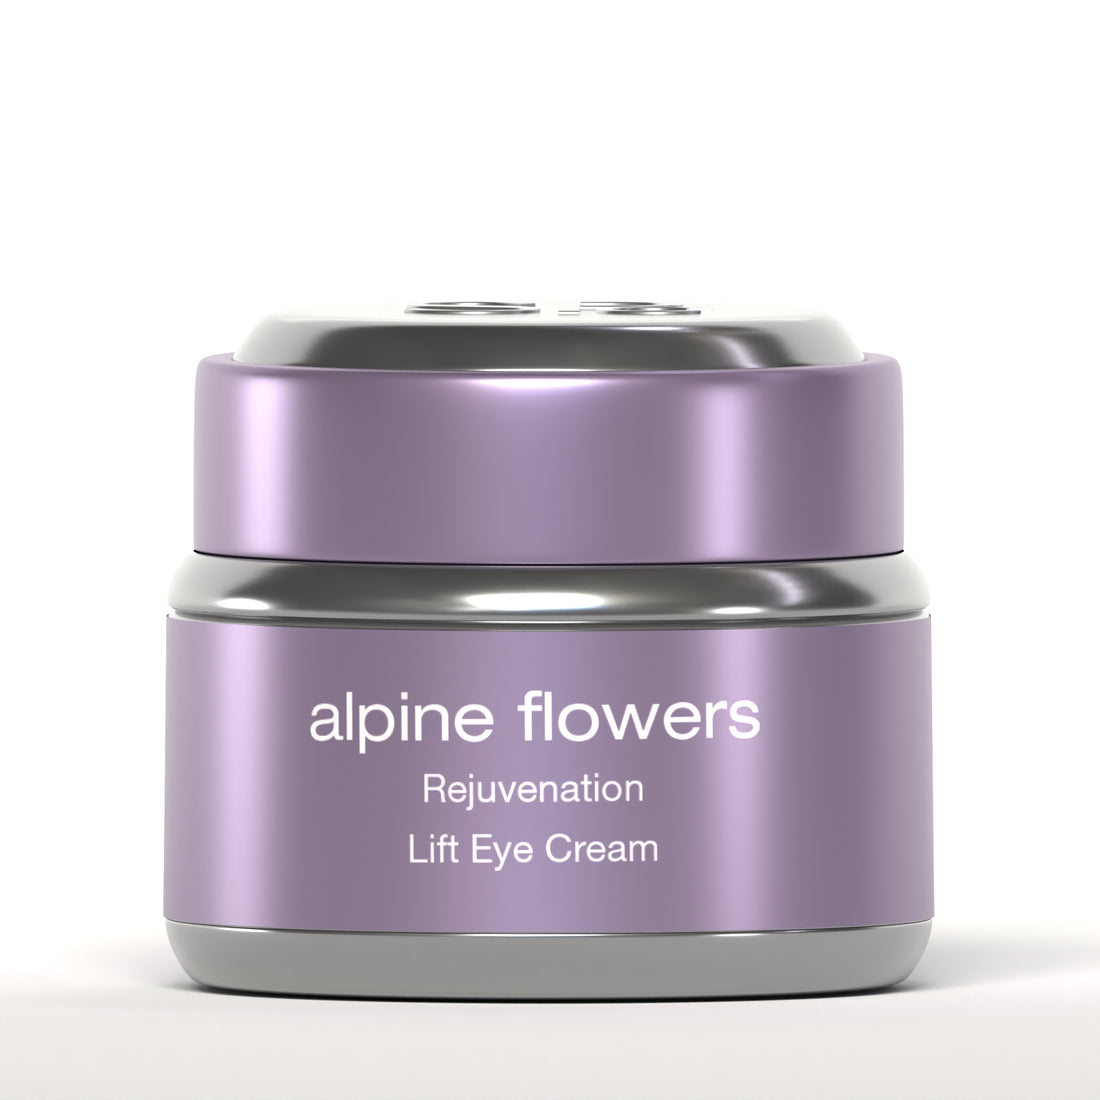 alpine flowers Lift Eye Cream